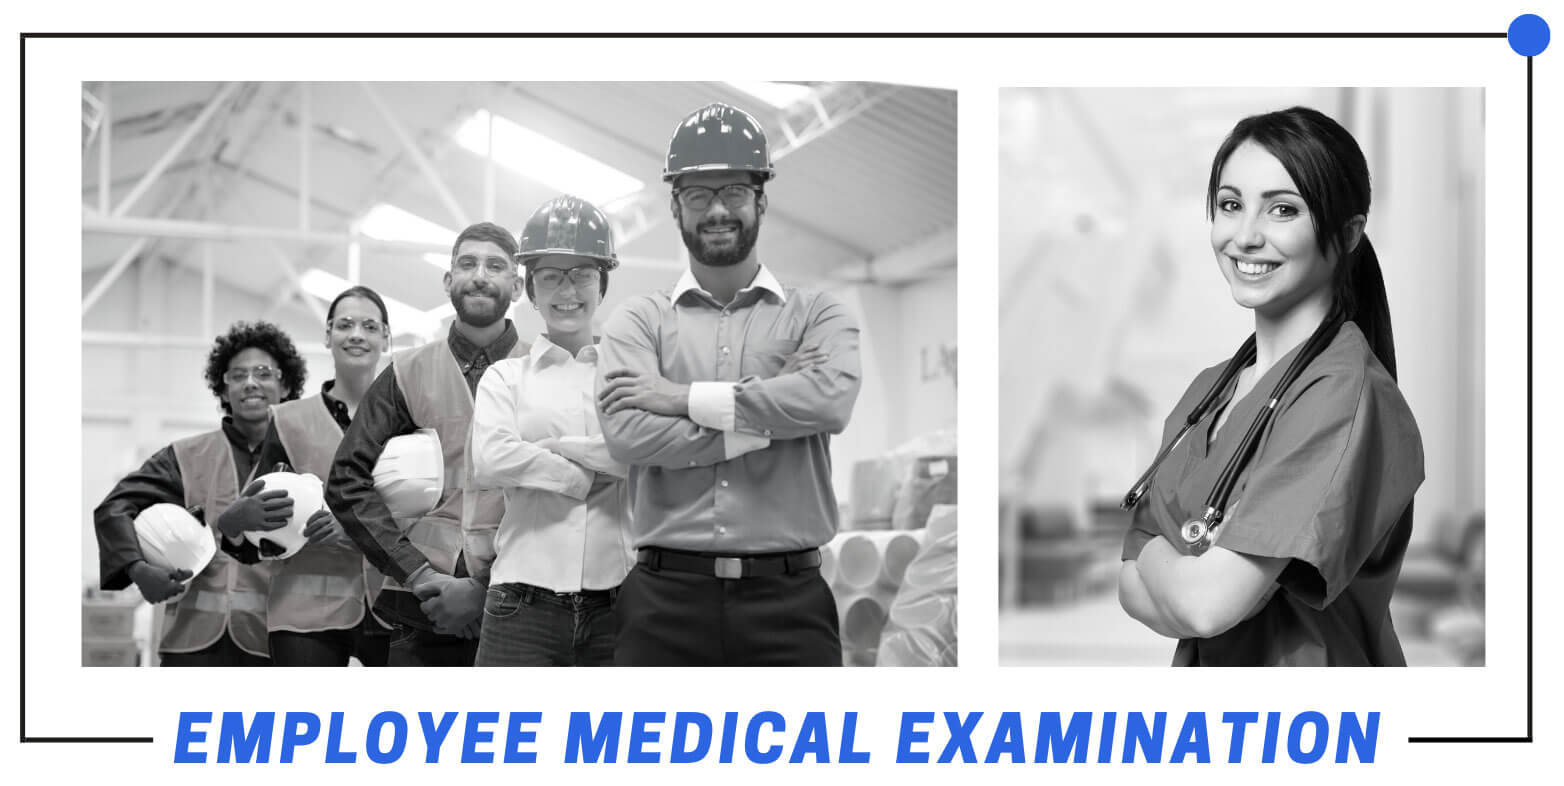 Employee-Medical-Examinaion+Employee-Medical-with-Nurse